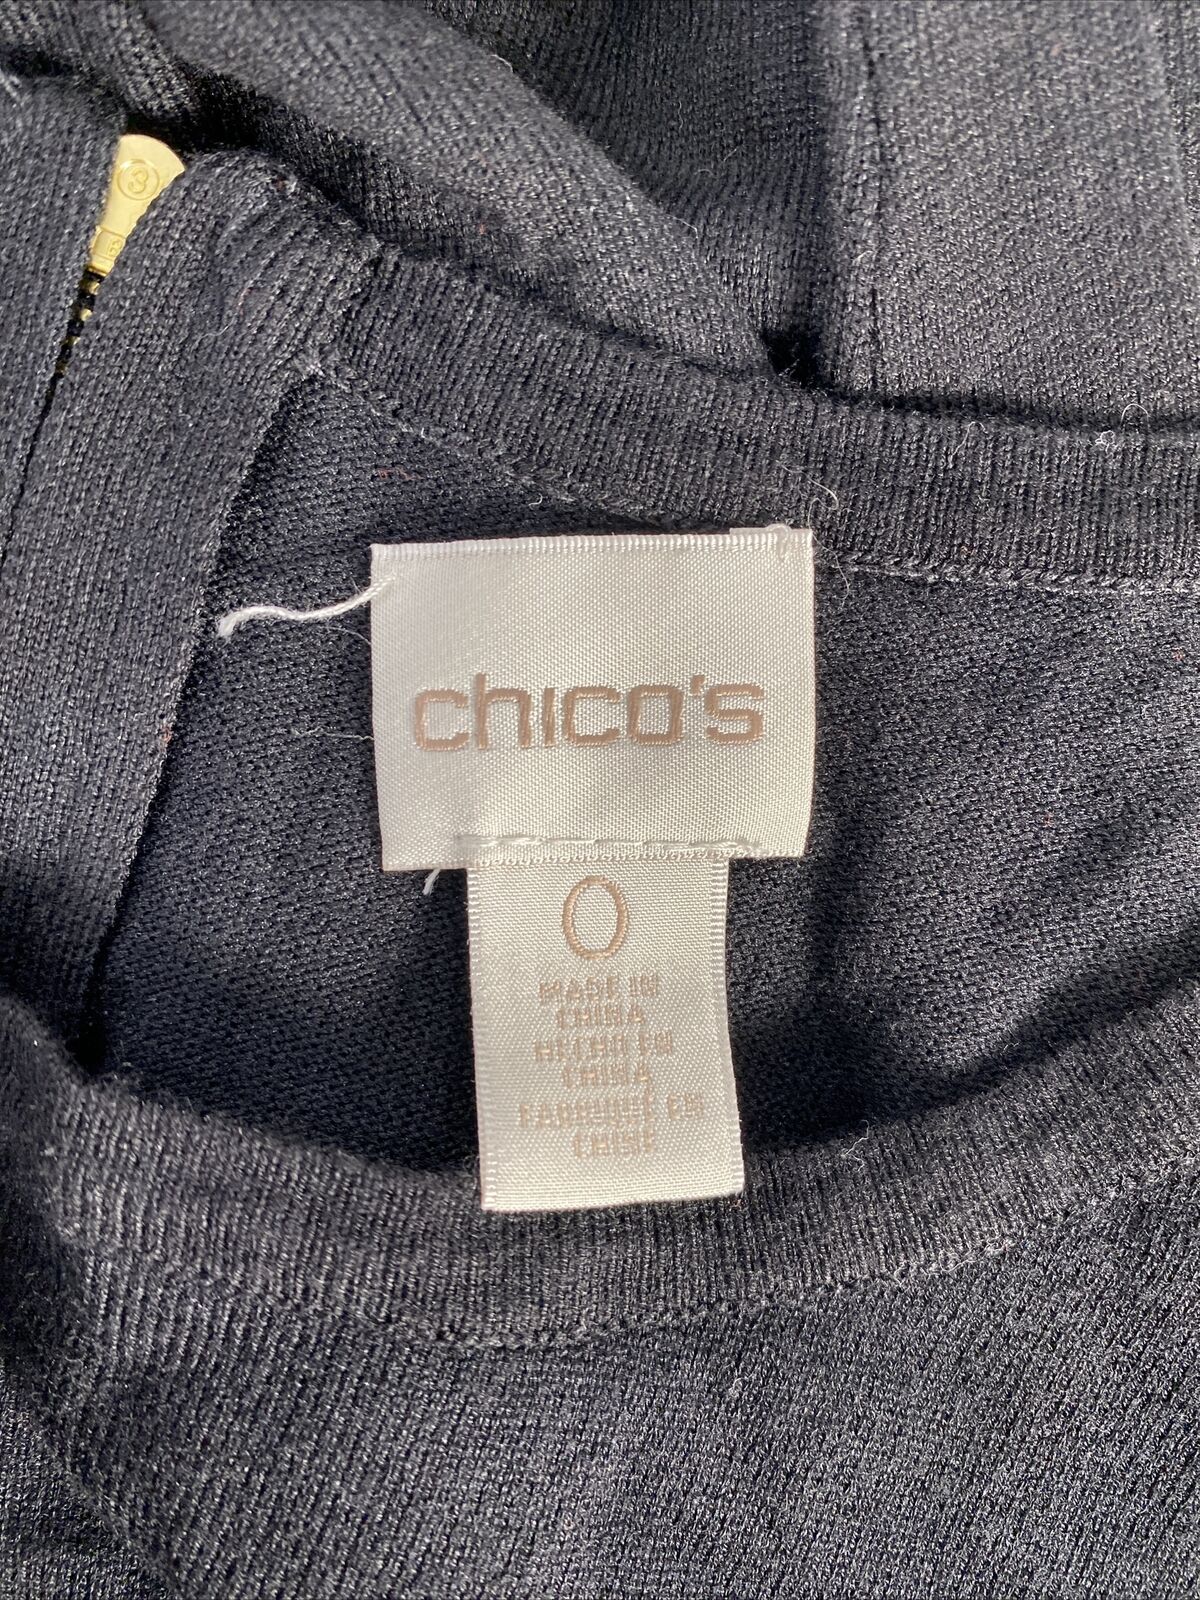 Chico's Camisa de punto negra de manga larga con cremallera trasera para mujer Talla 0/US S